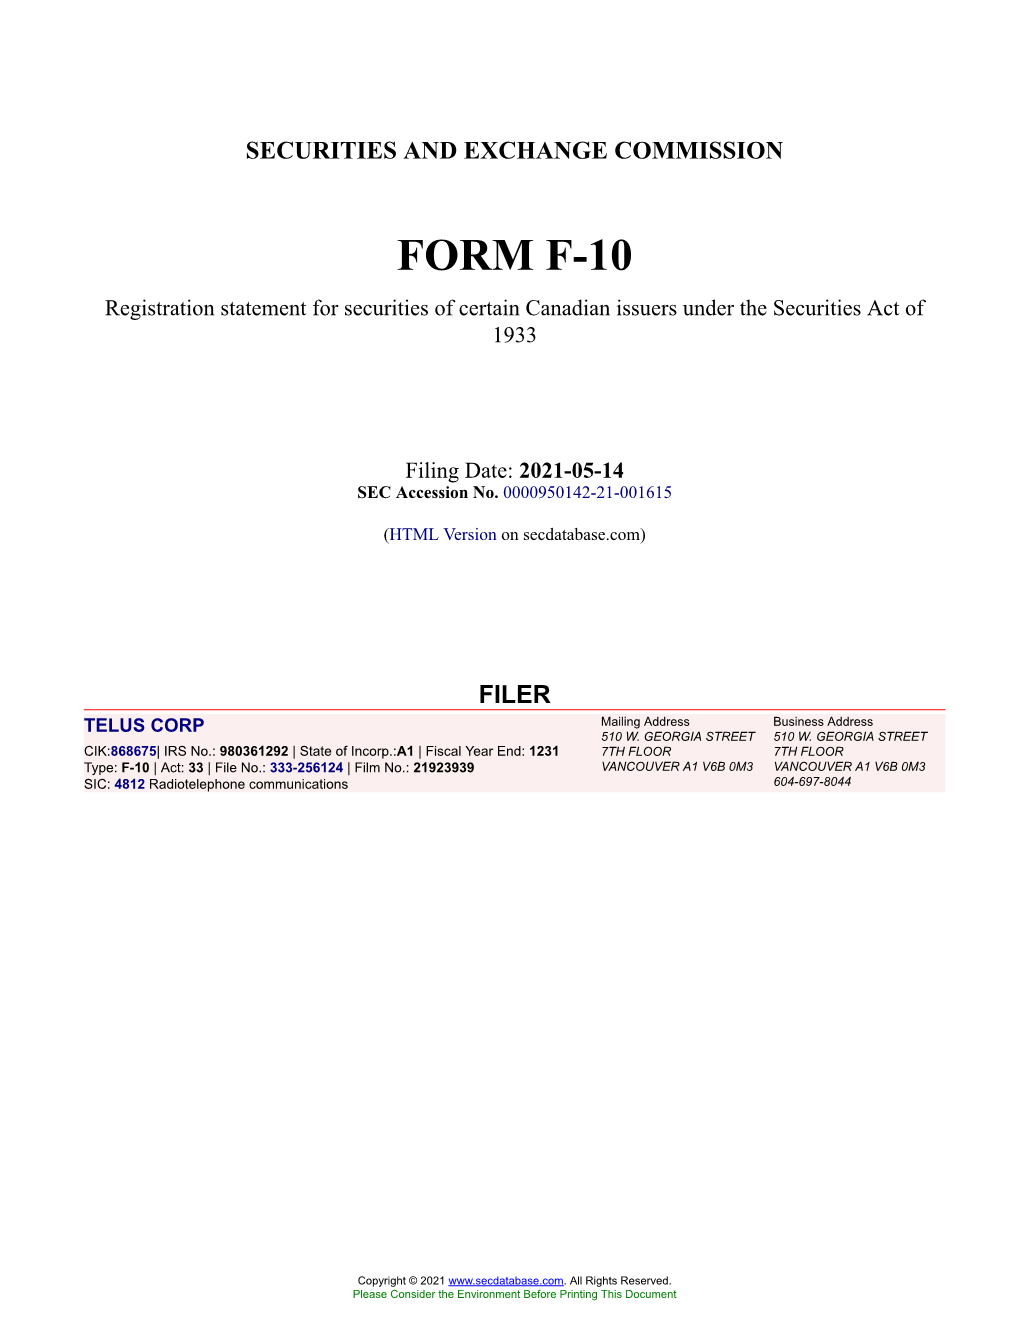 TELUS CORP Form F-10 Filed 2021-05-14